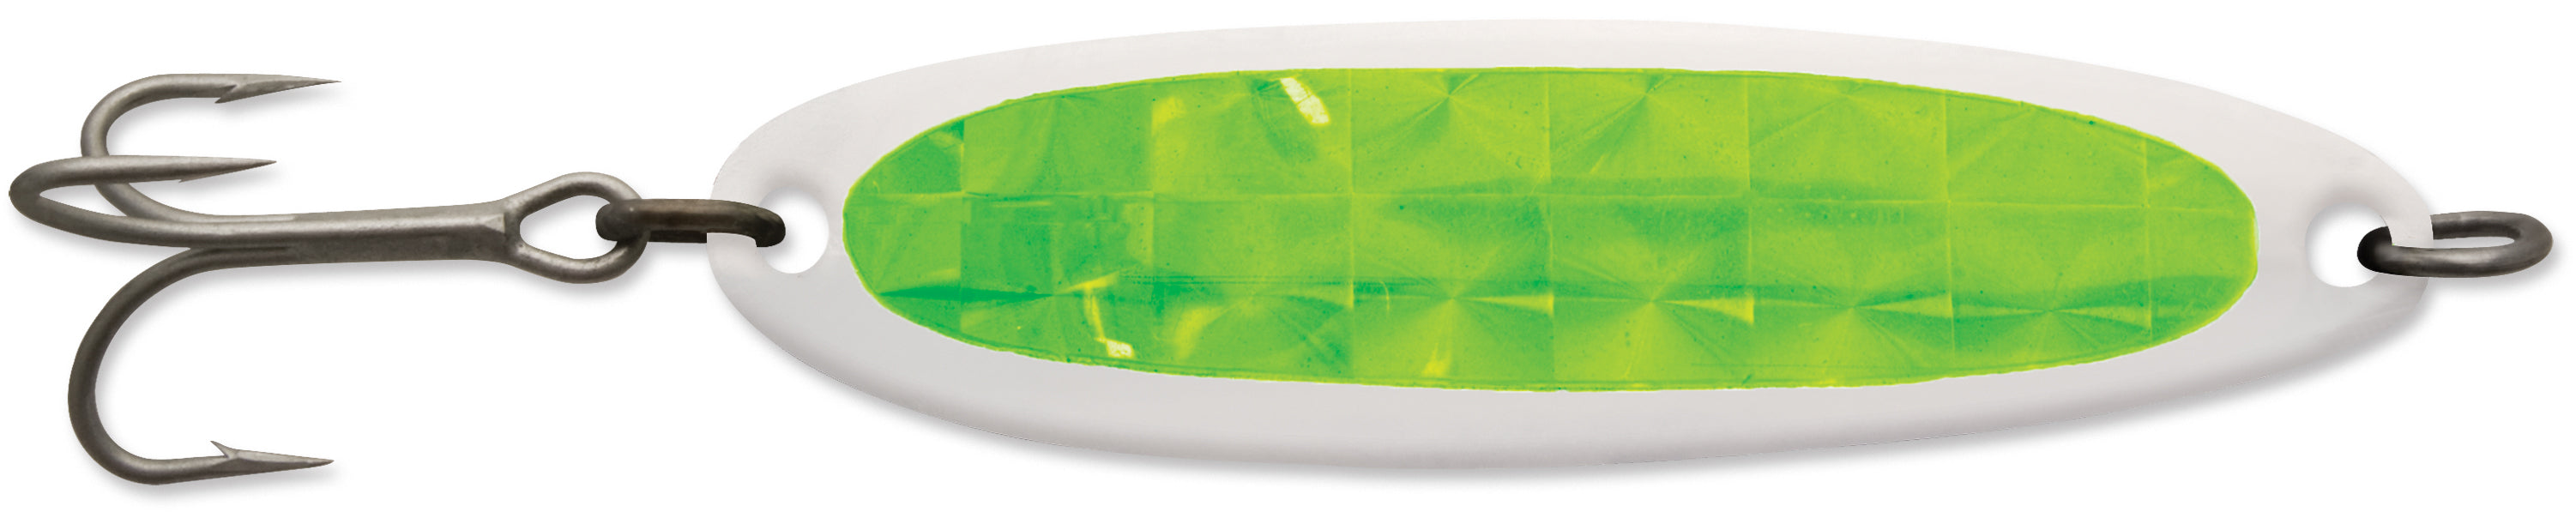 Luhr Jensen 1oz Krocodile, Chrome/Fluorescent Green Prism-Lite